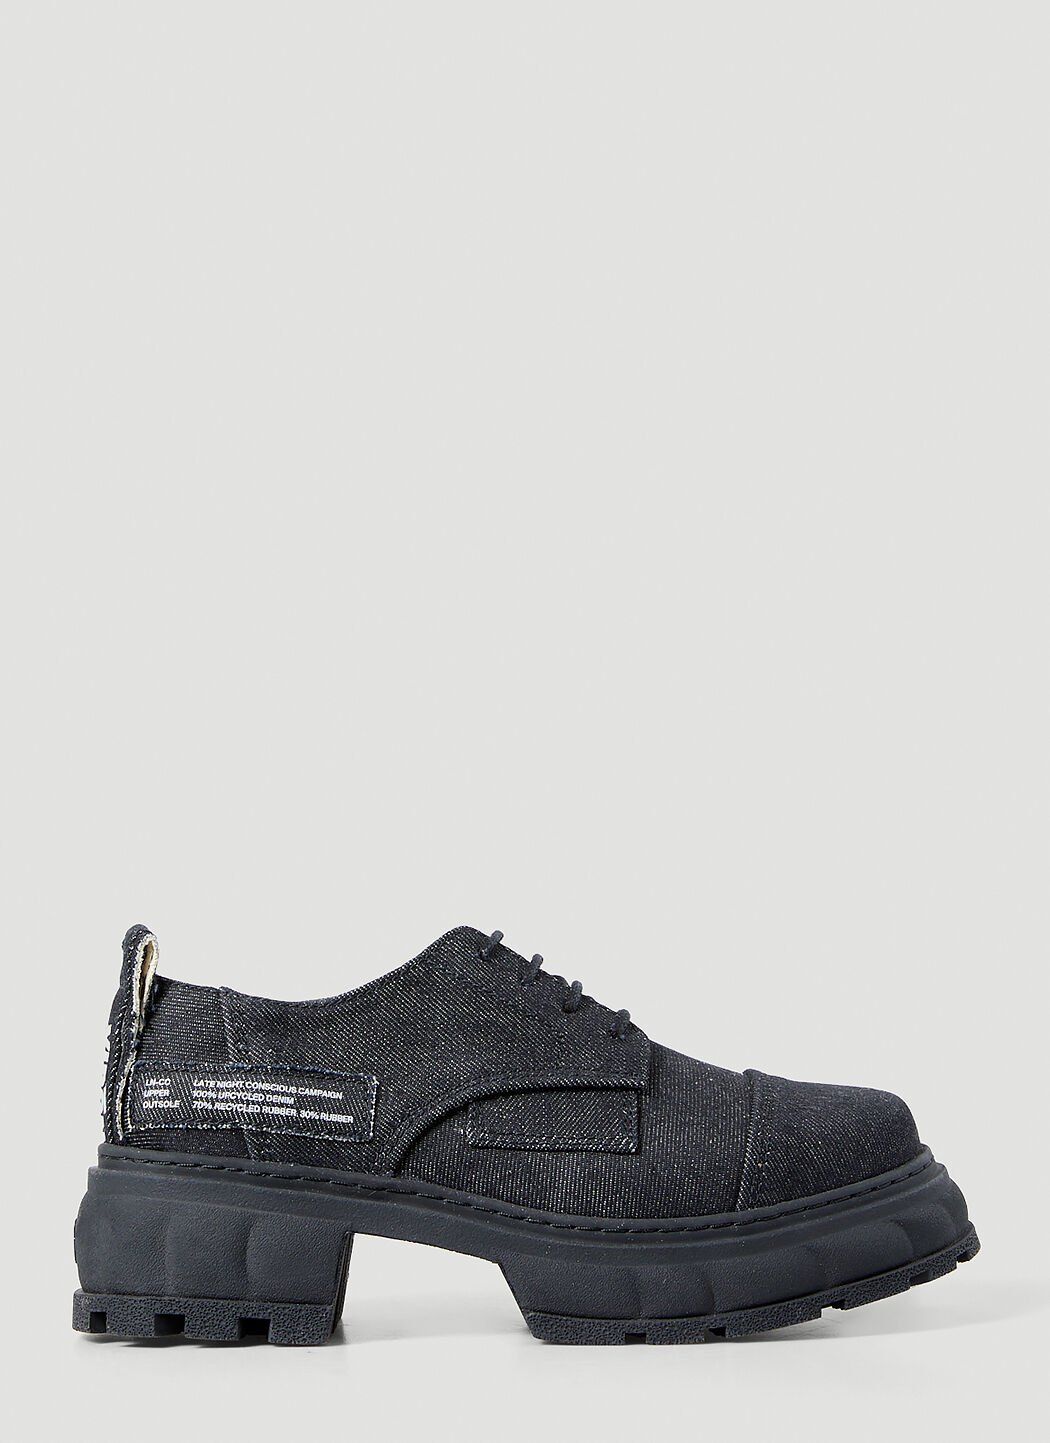 Gucci x LN-CC Alter Denim Shoes Black guc0255064